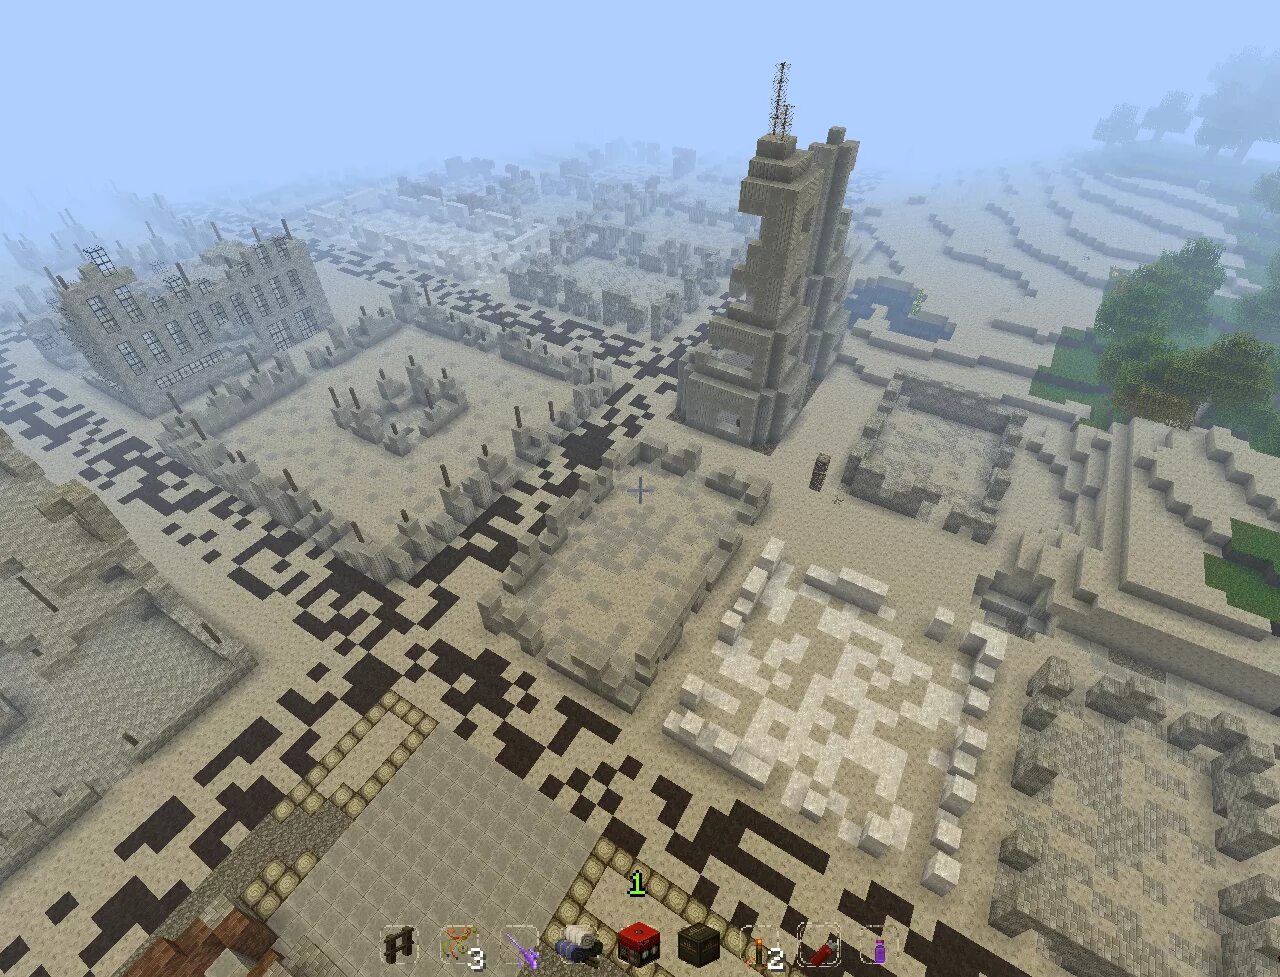 Apocalyptic City майнкрафт. Minecraft Apocalyptic City карта. Майнкрафт ядерный апокалипсис город. Постапокалипсис майнкрафт. Постапокалипсис в майнкрафт